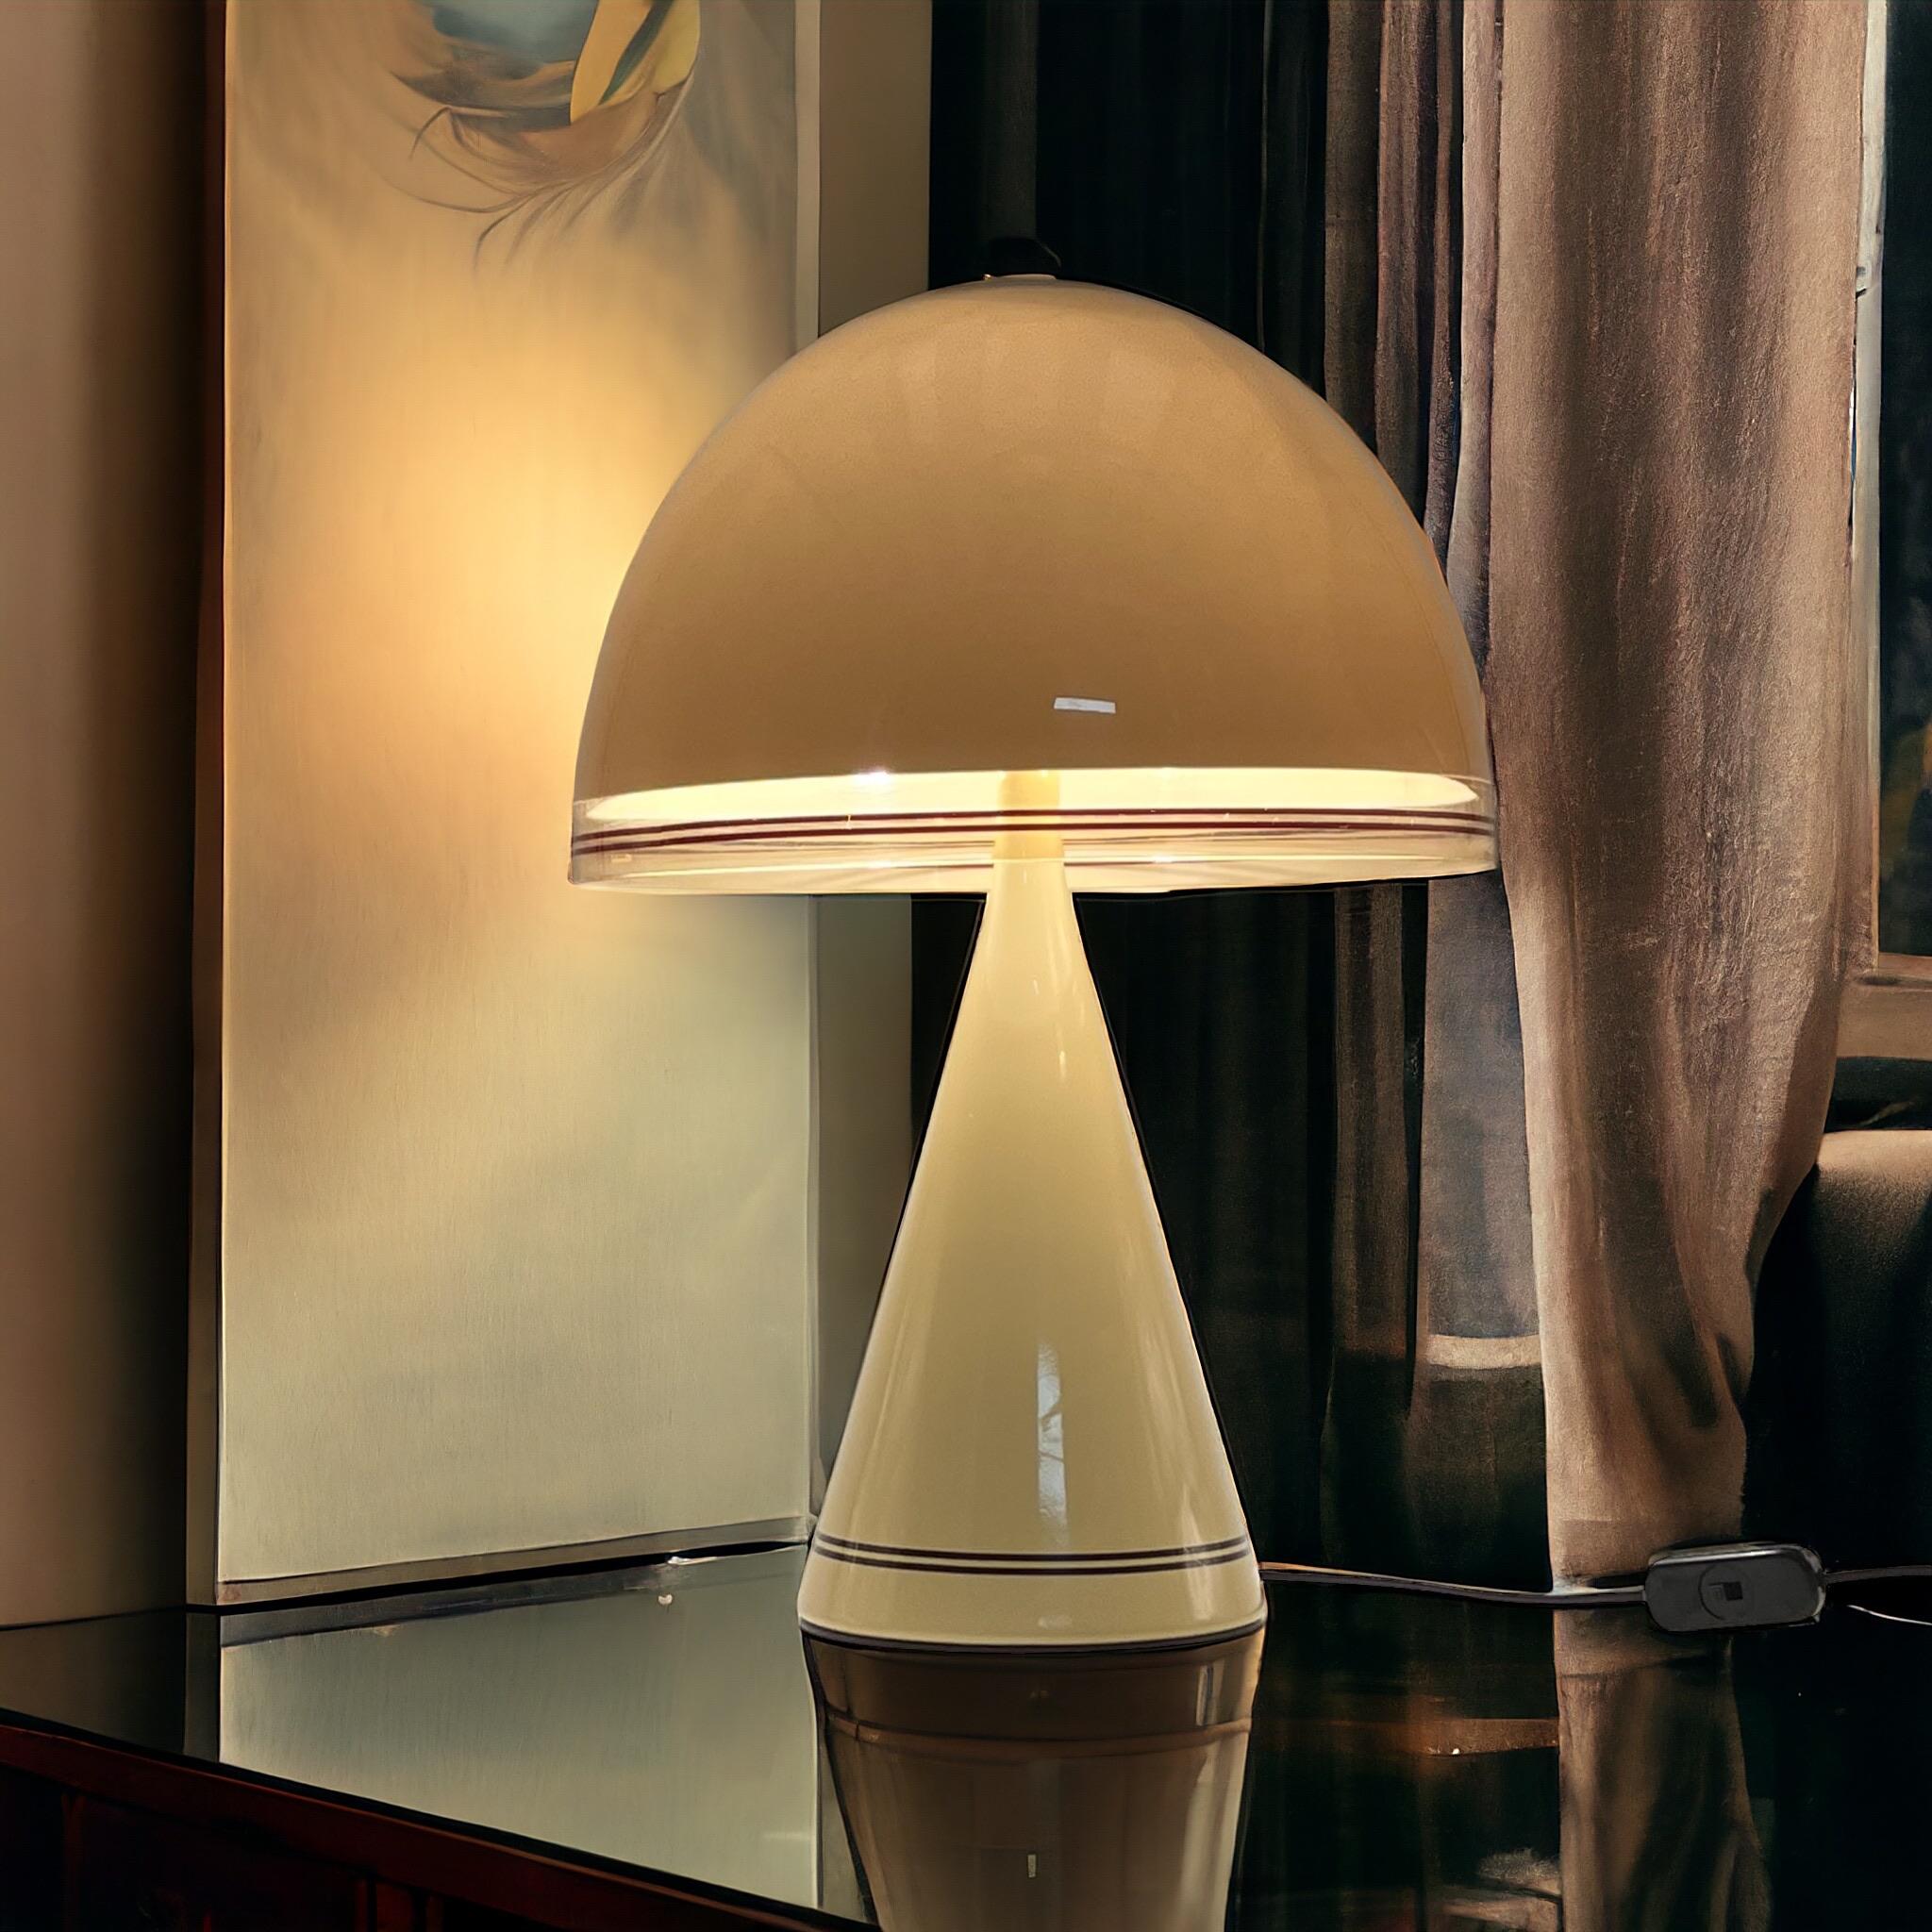 Iconic Mushroom 70s Lamp ‘Baobab’ by iGuzzini - Italian Space Age Iconic Lamp For Sale 3